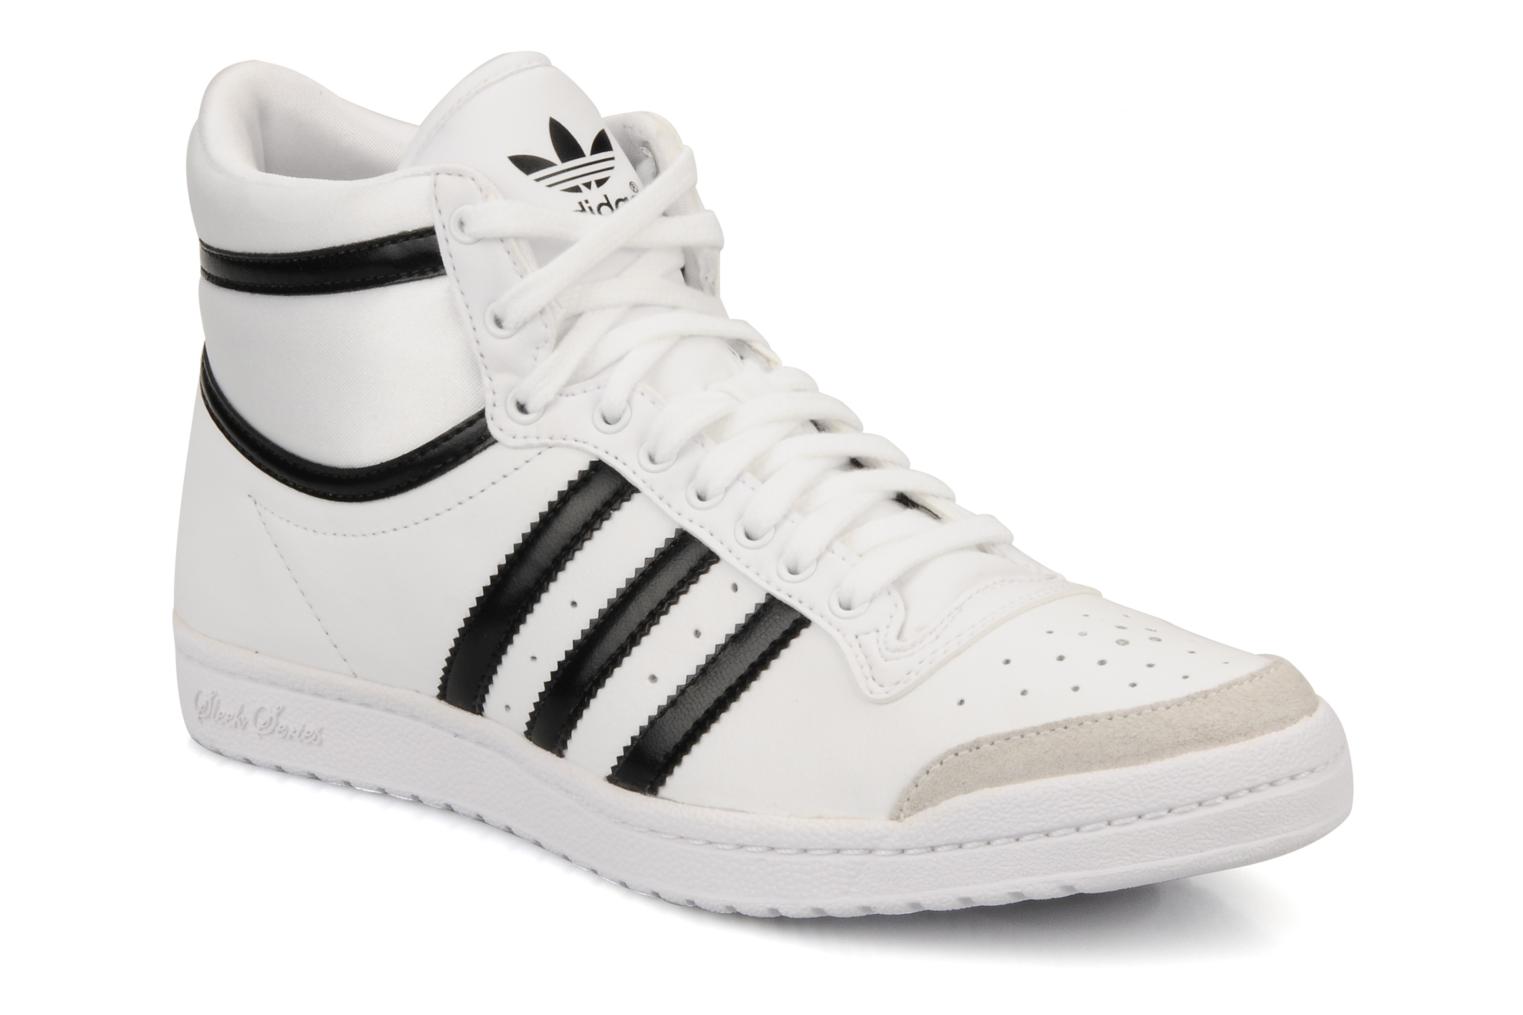 Adidas Originals Top ten hi sleek w Trainers in White at Sarenza.co.uk ...